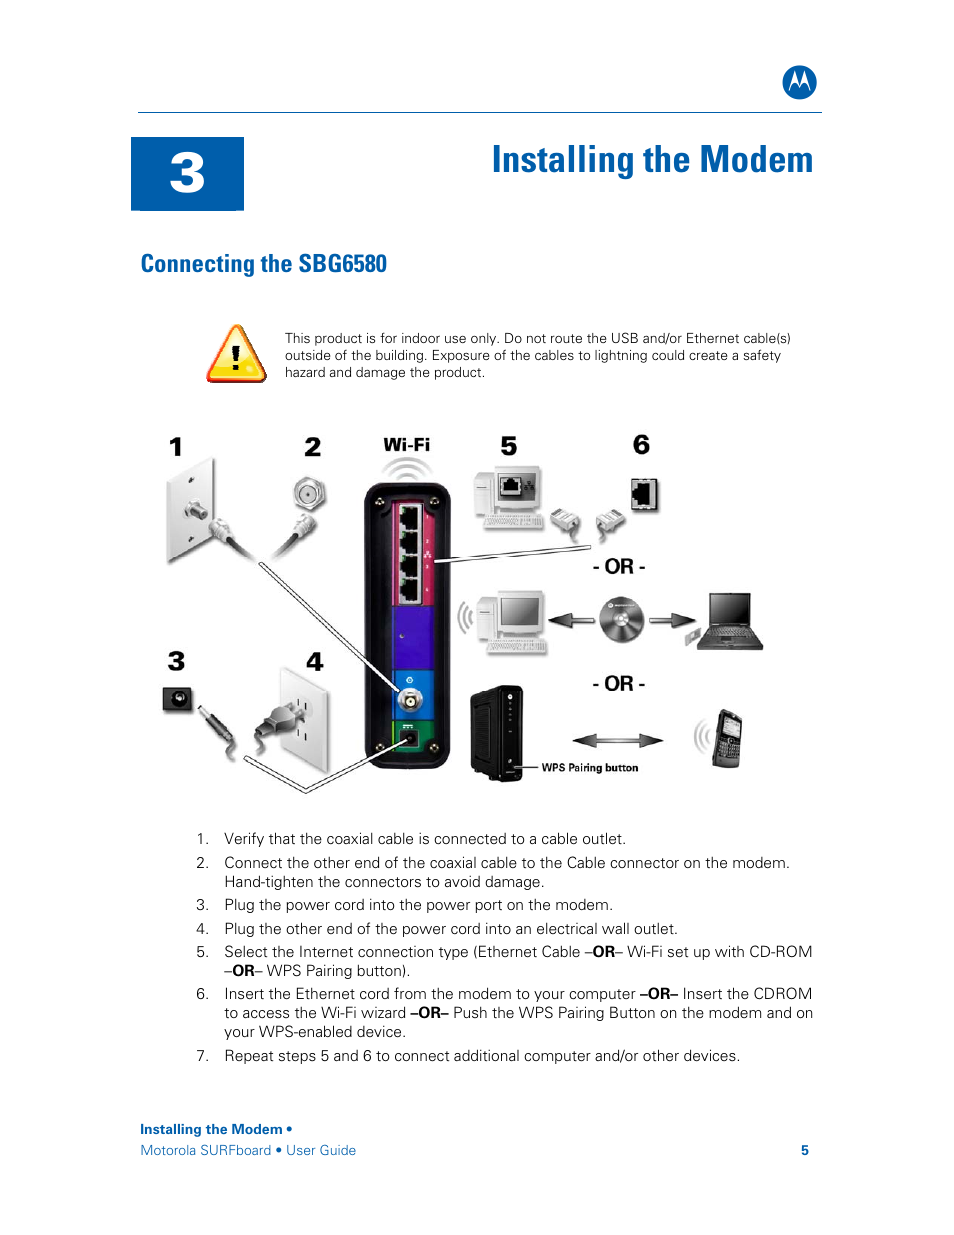 Connecting the sbg6580, Installing the modem | Motorola SURFboard